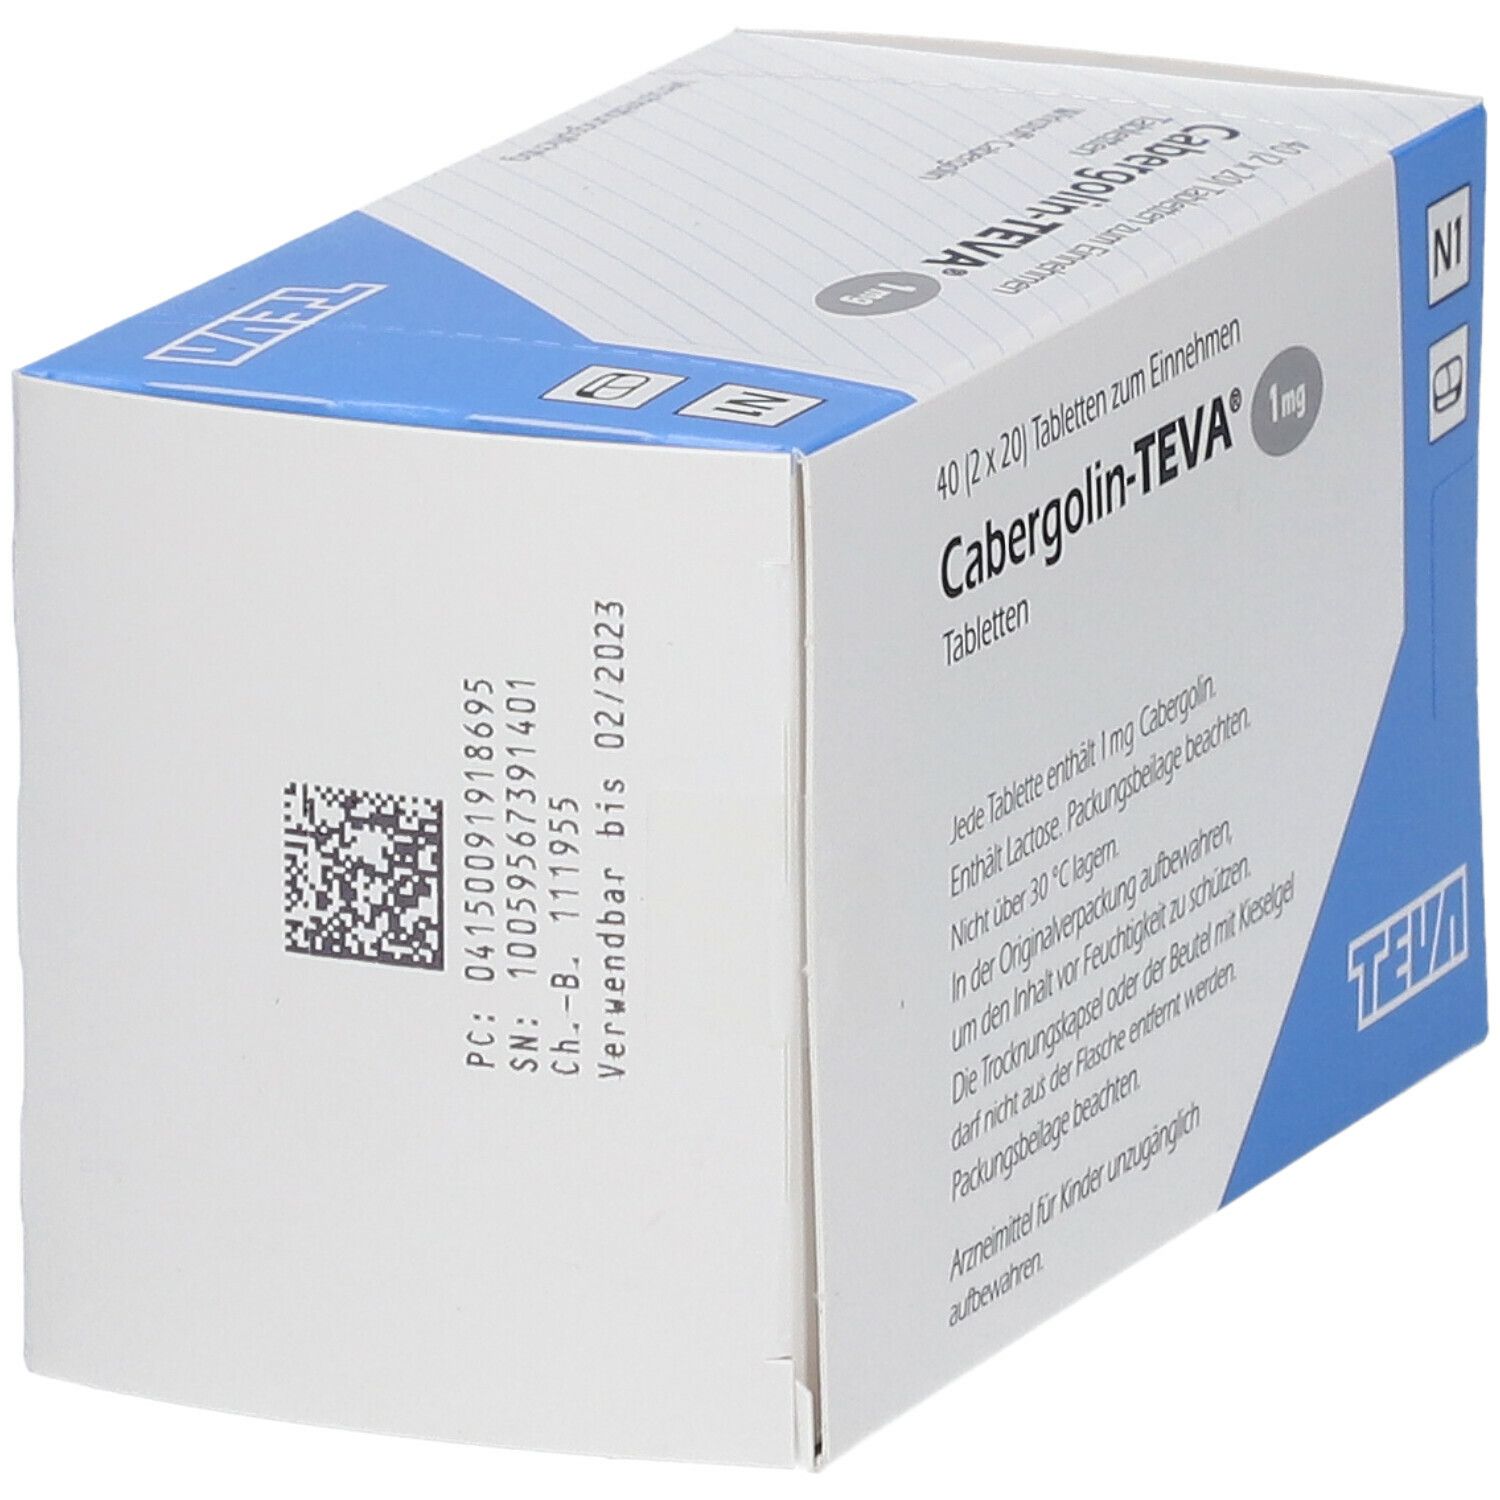 Cabergolin-TEVA® 1 mg